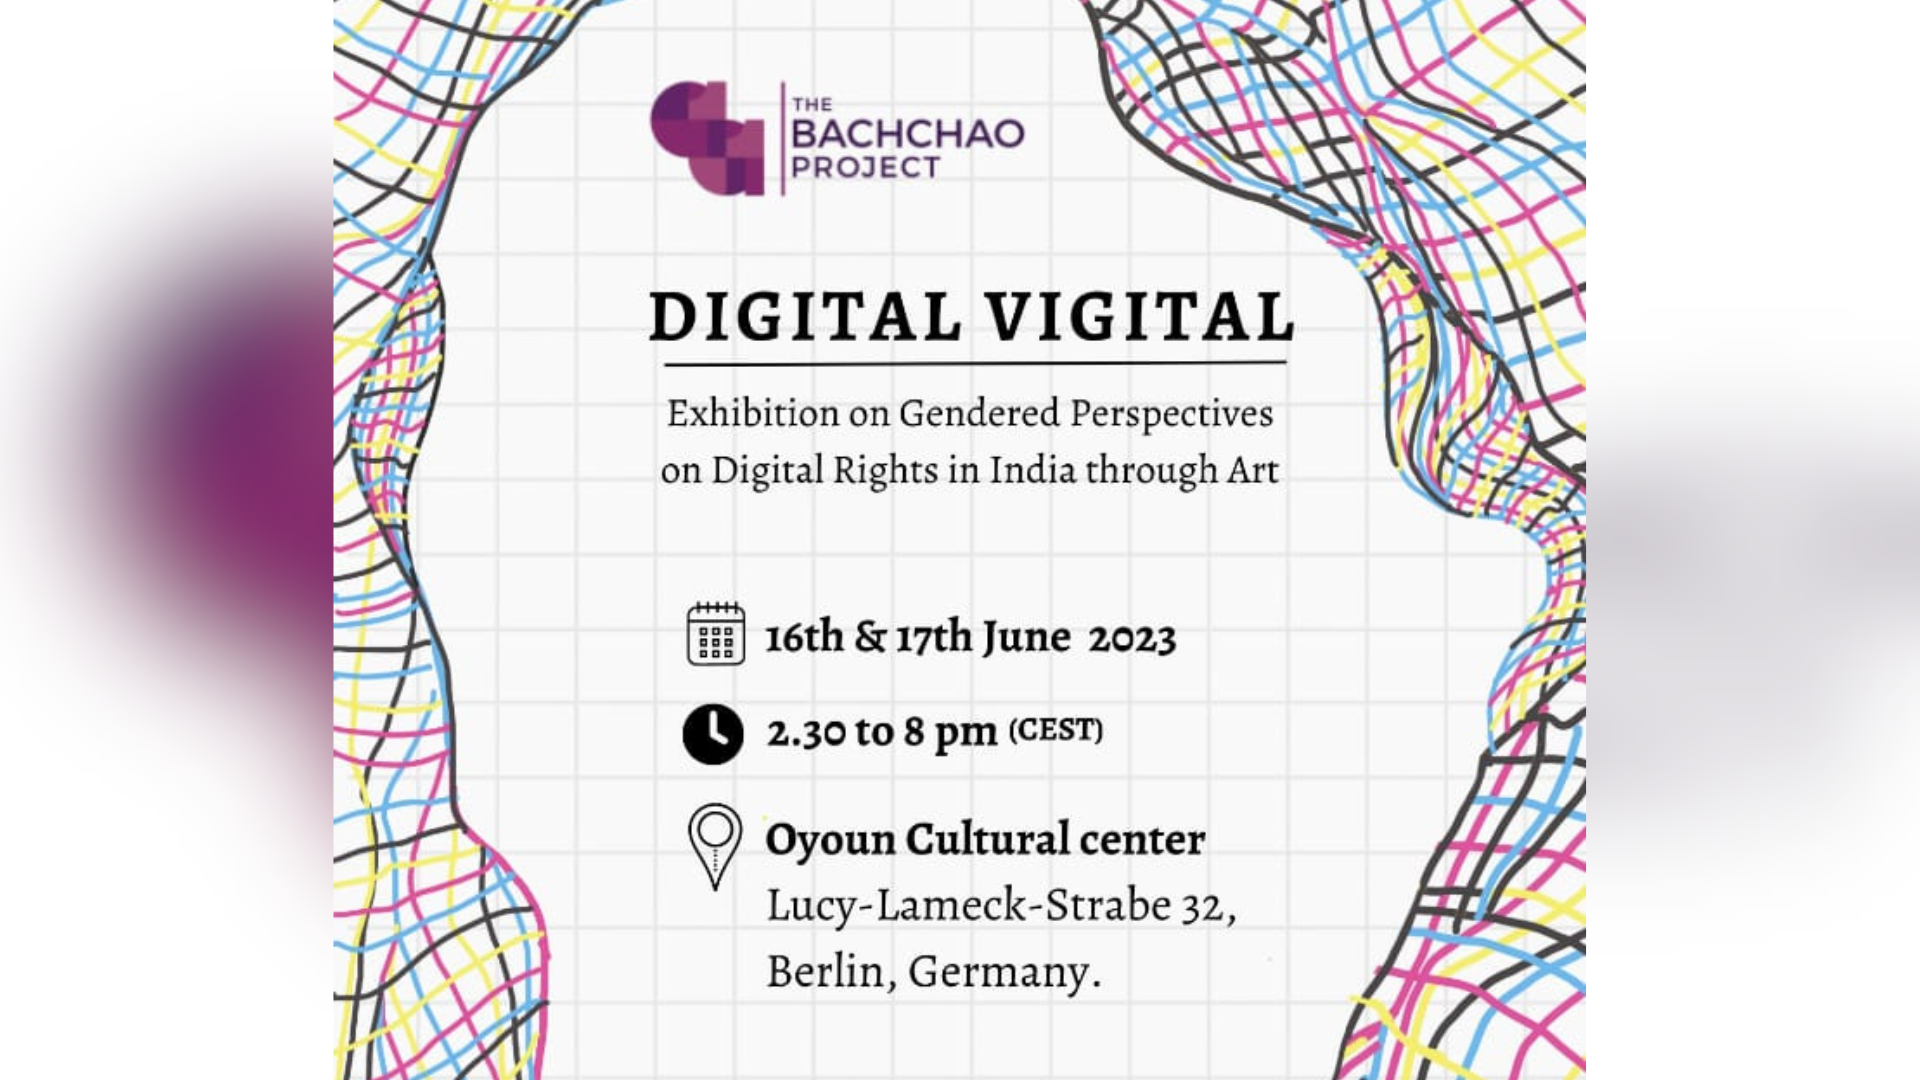 Technical Fellow, Bacchao Project, Digital Vigital, Germany